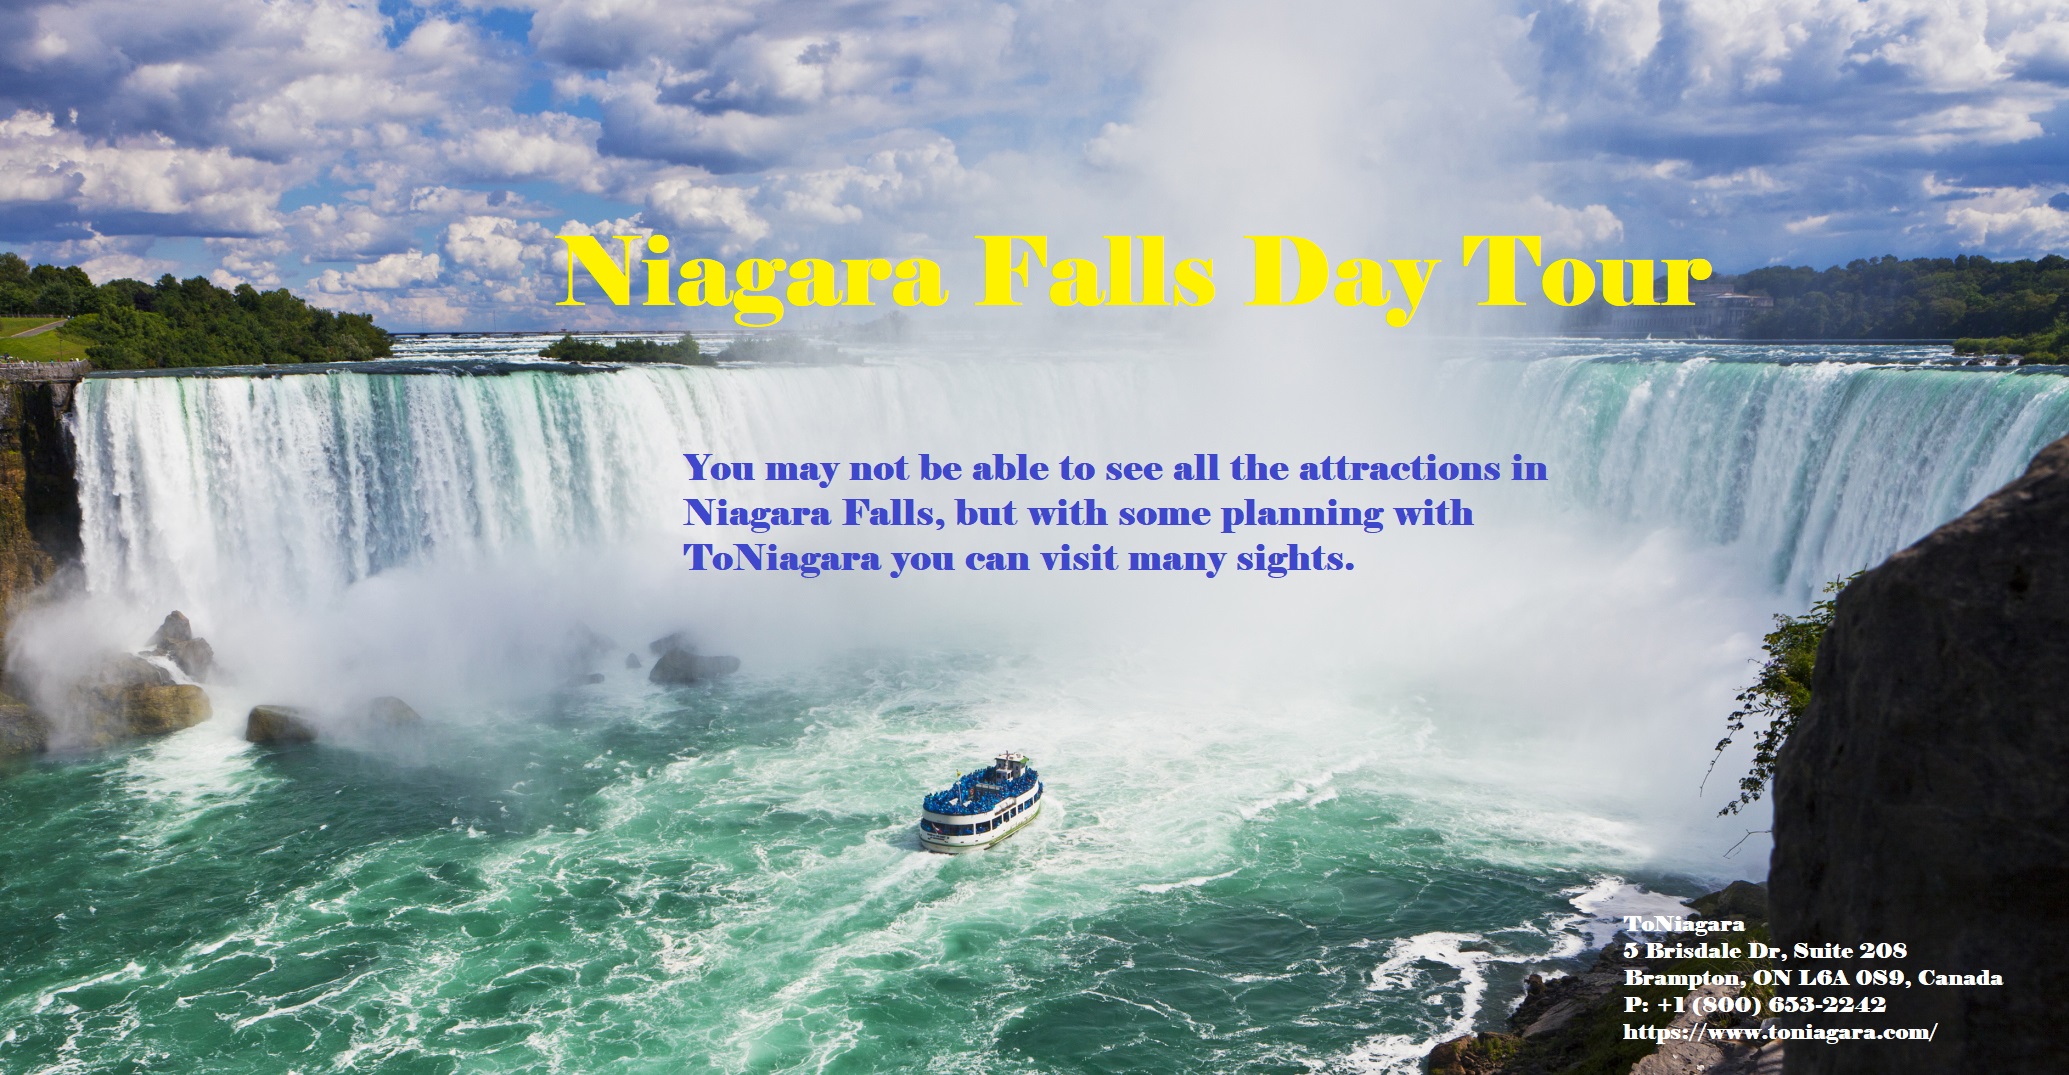 Niagara Falls Day Trip.jpg  by toniagara2017